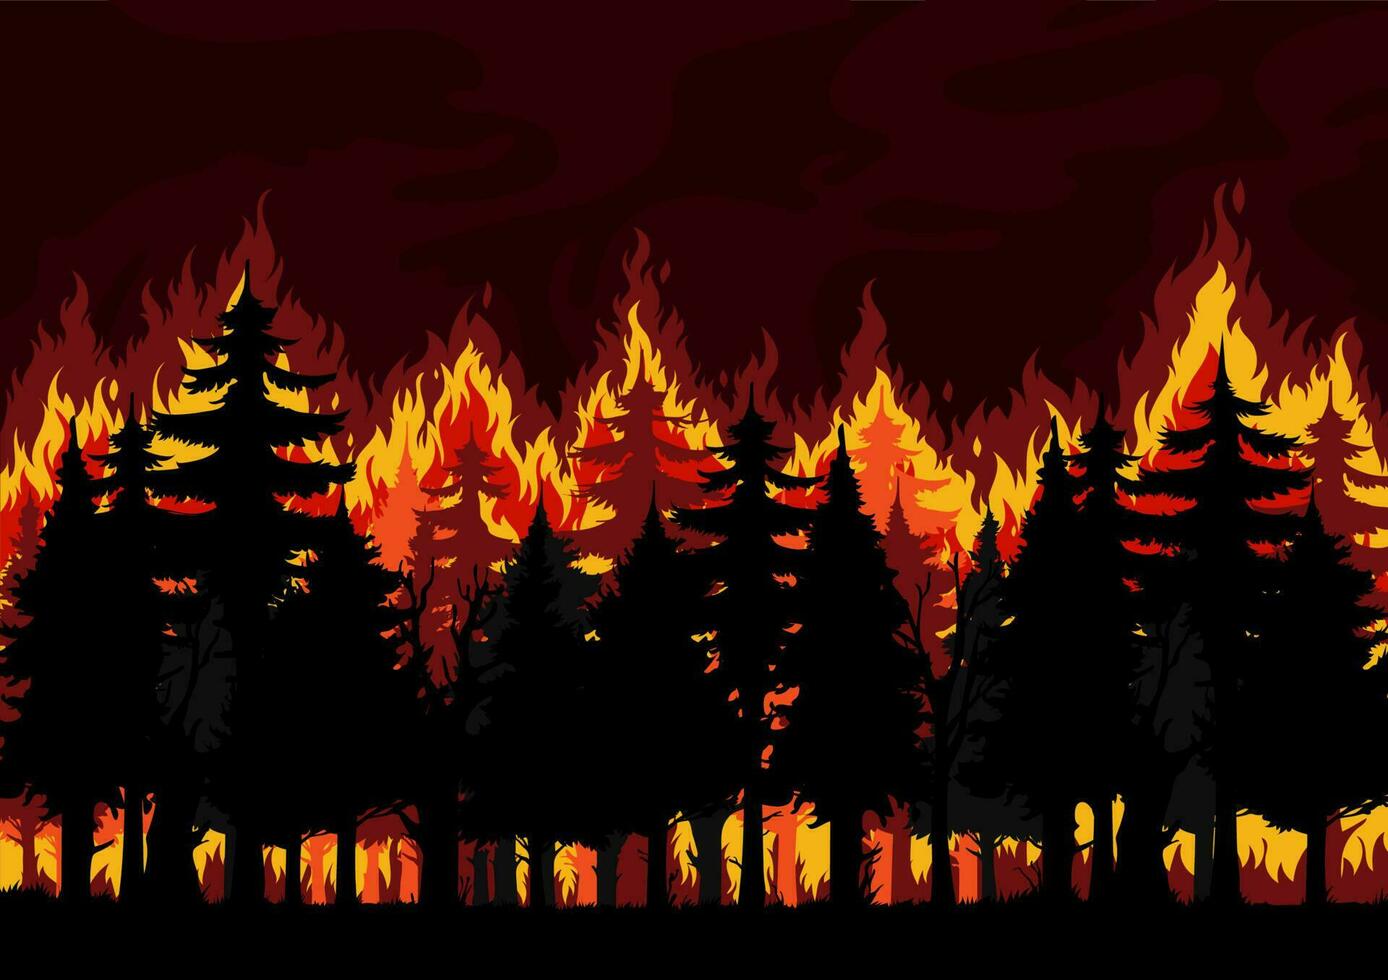 gran skog brand, naturlig katastrof bakgrund vektor